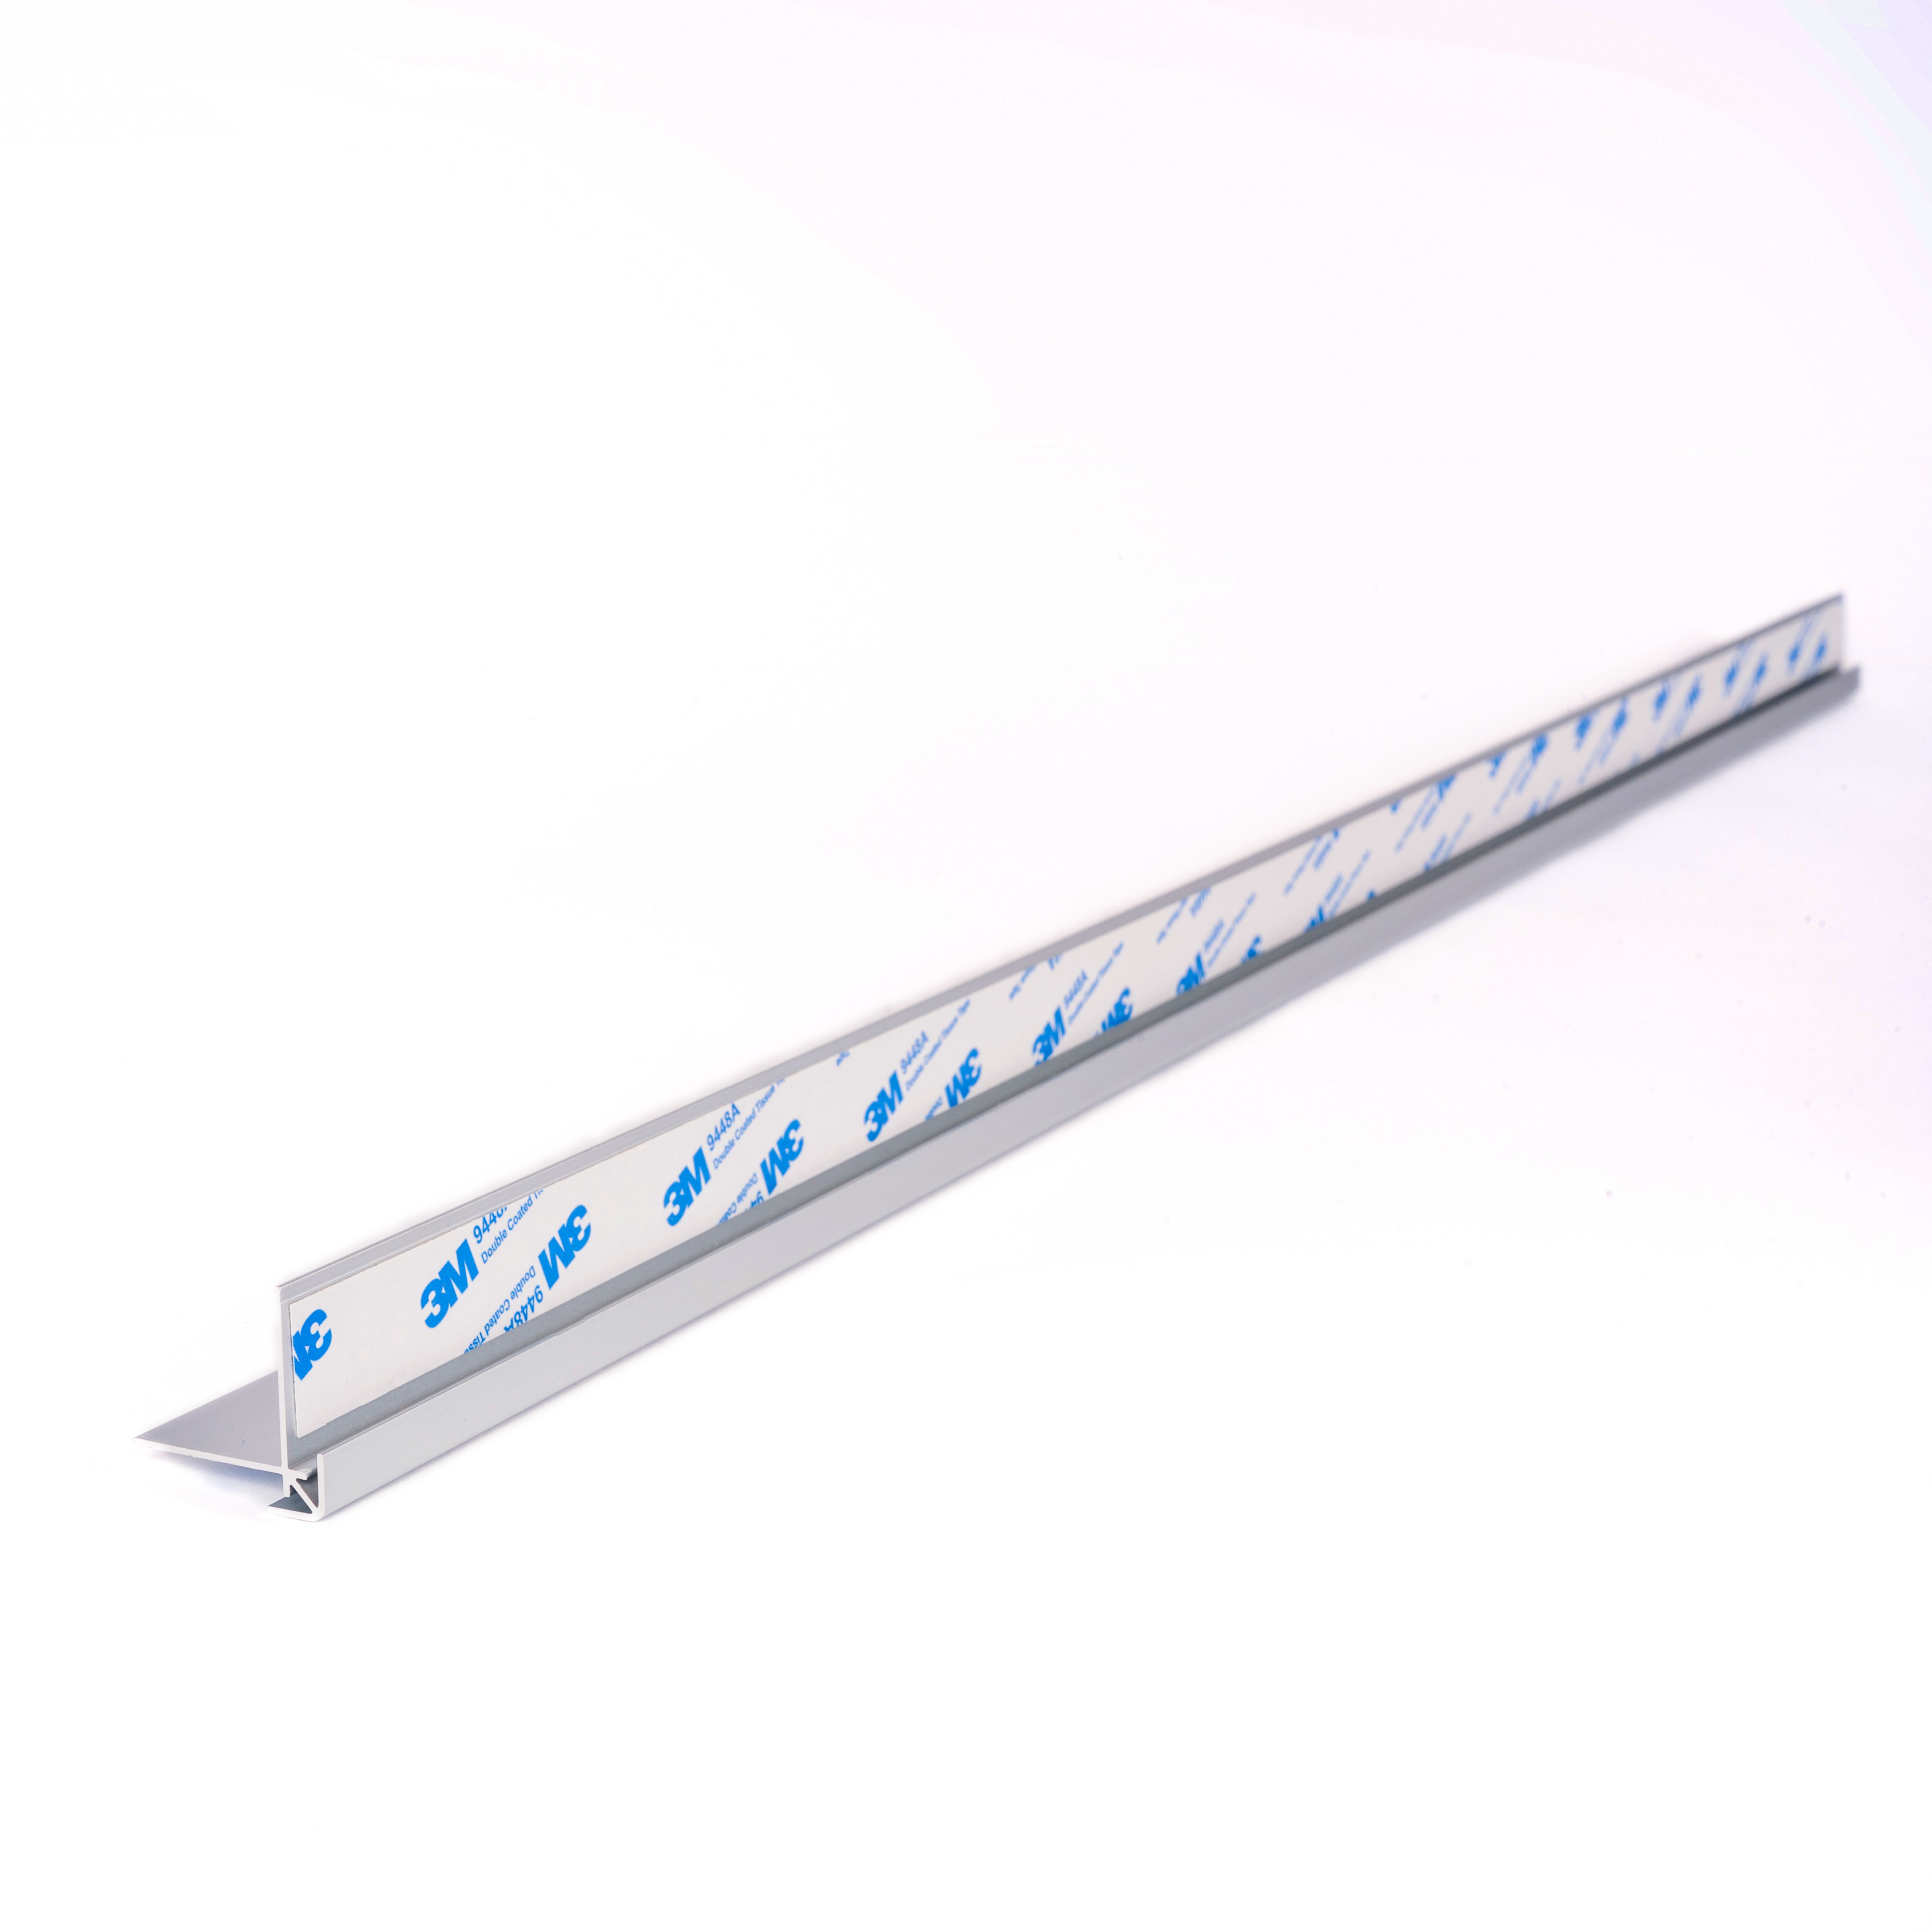 Splashwall Alloy Silver Aluminium External Worktop Corner Joint H 600mm~5060699098196 01c Bq?$MOB PREV$&$width=768&$height=768